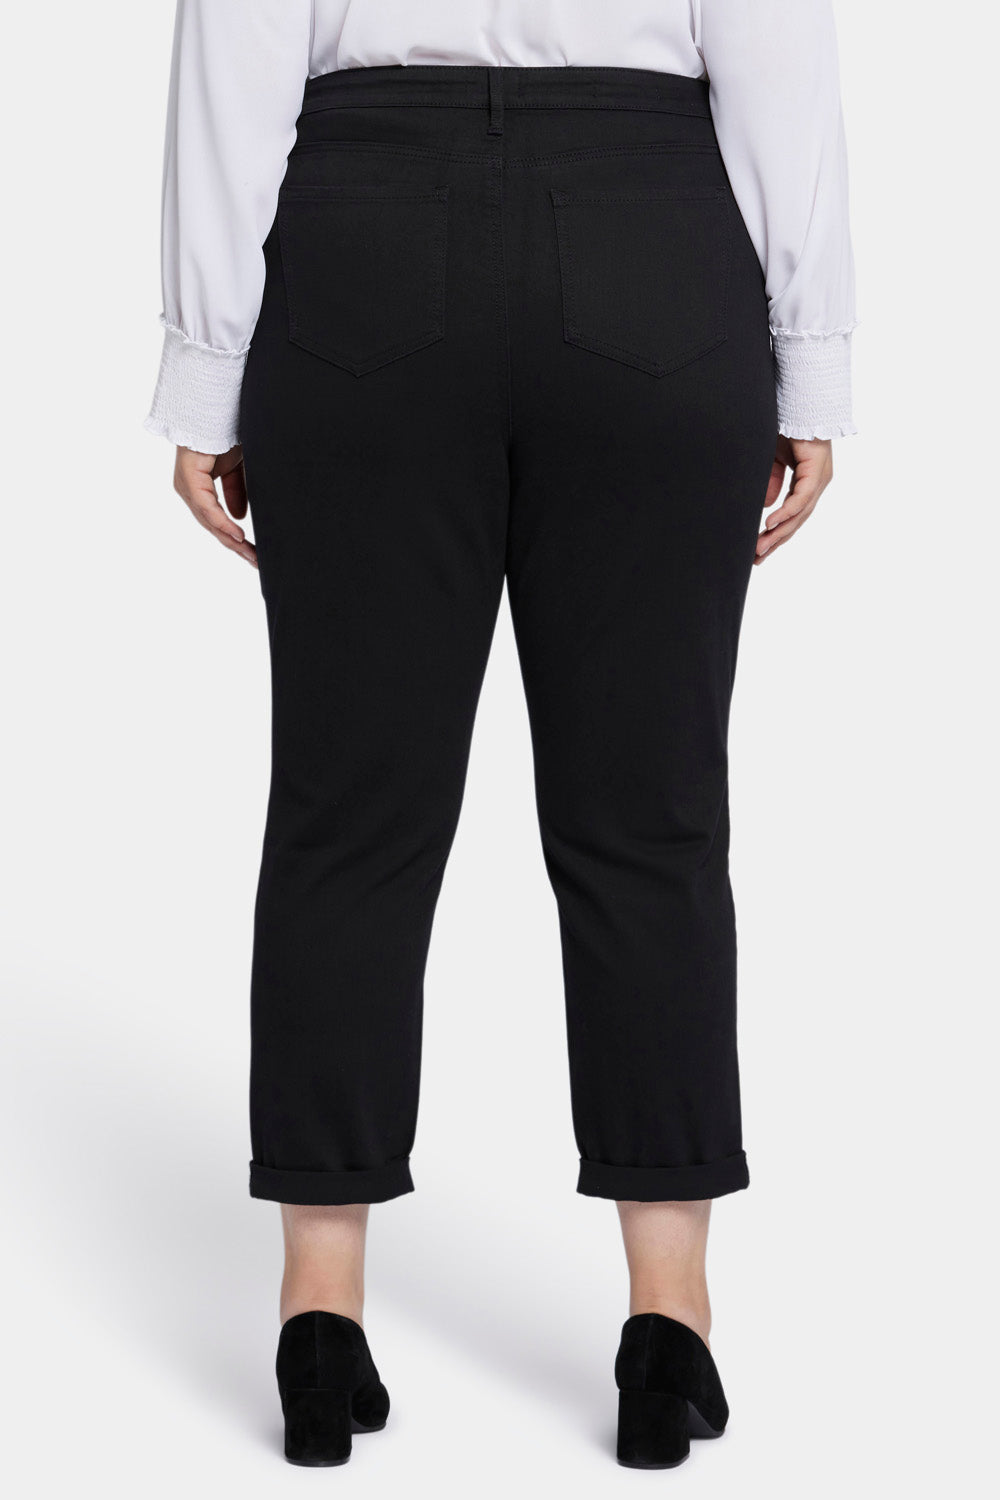 NYDJ Margot Girlfriend Jeans In Petite Plus Size In Cool Embrace® Denim With Roll Cuffs - Black